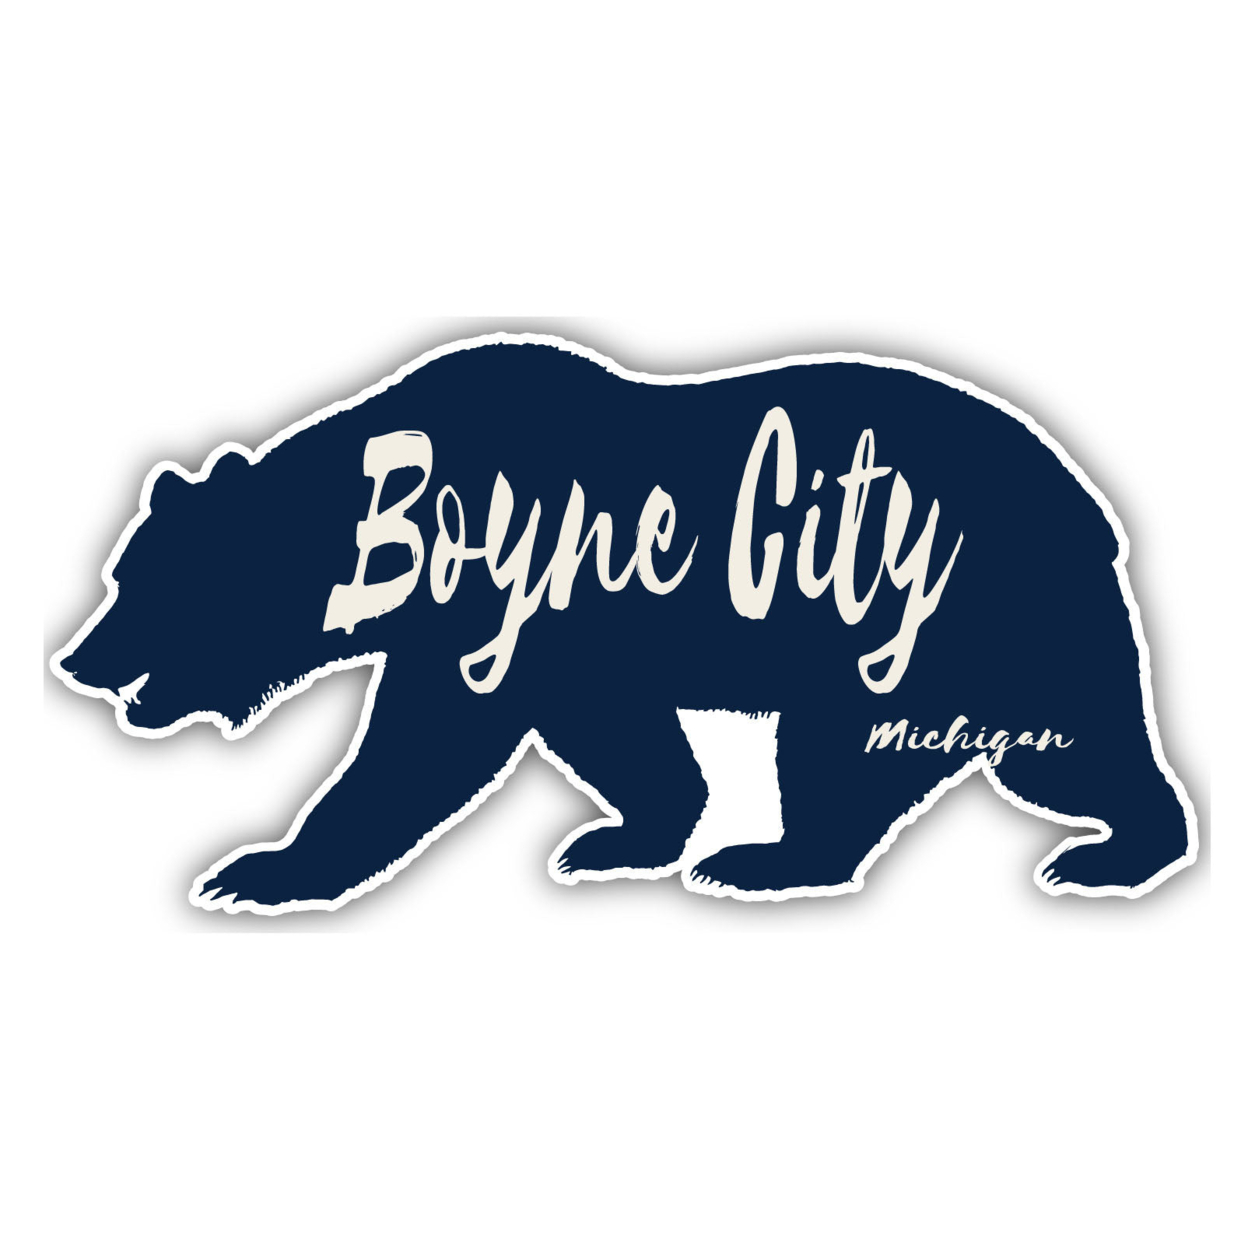 Boyne City Michigan Souvenir Decorative Stickers (Choose Theme And Size) - 4-Pack, 8-Inch, Tent